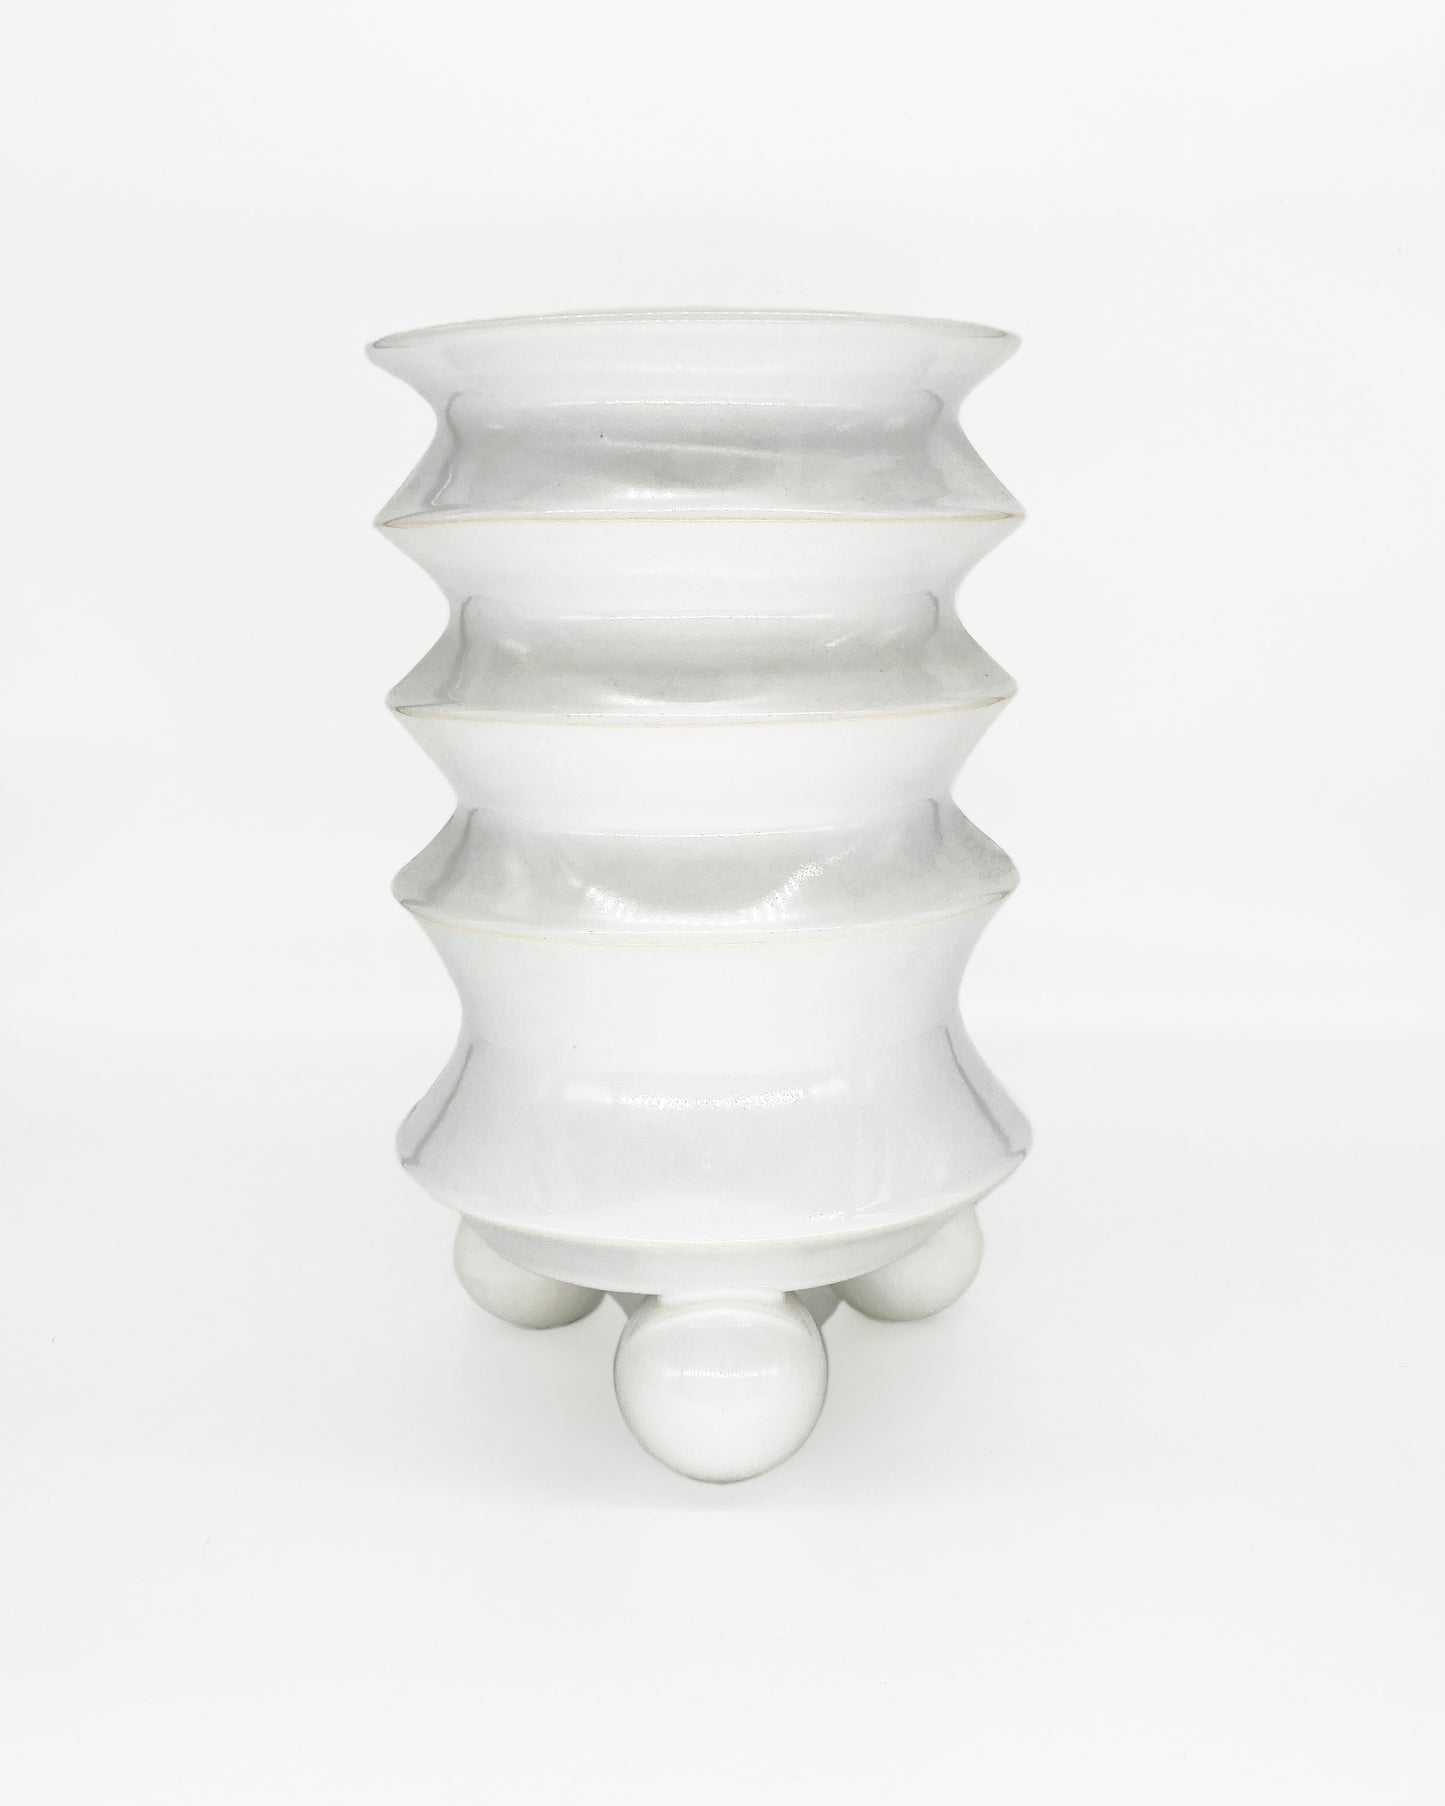 SALE First Edition Toltec Pop Art Ceramic Vase White